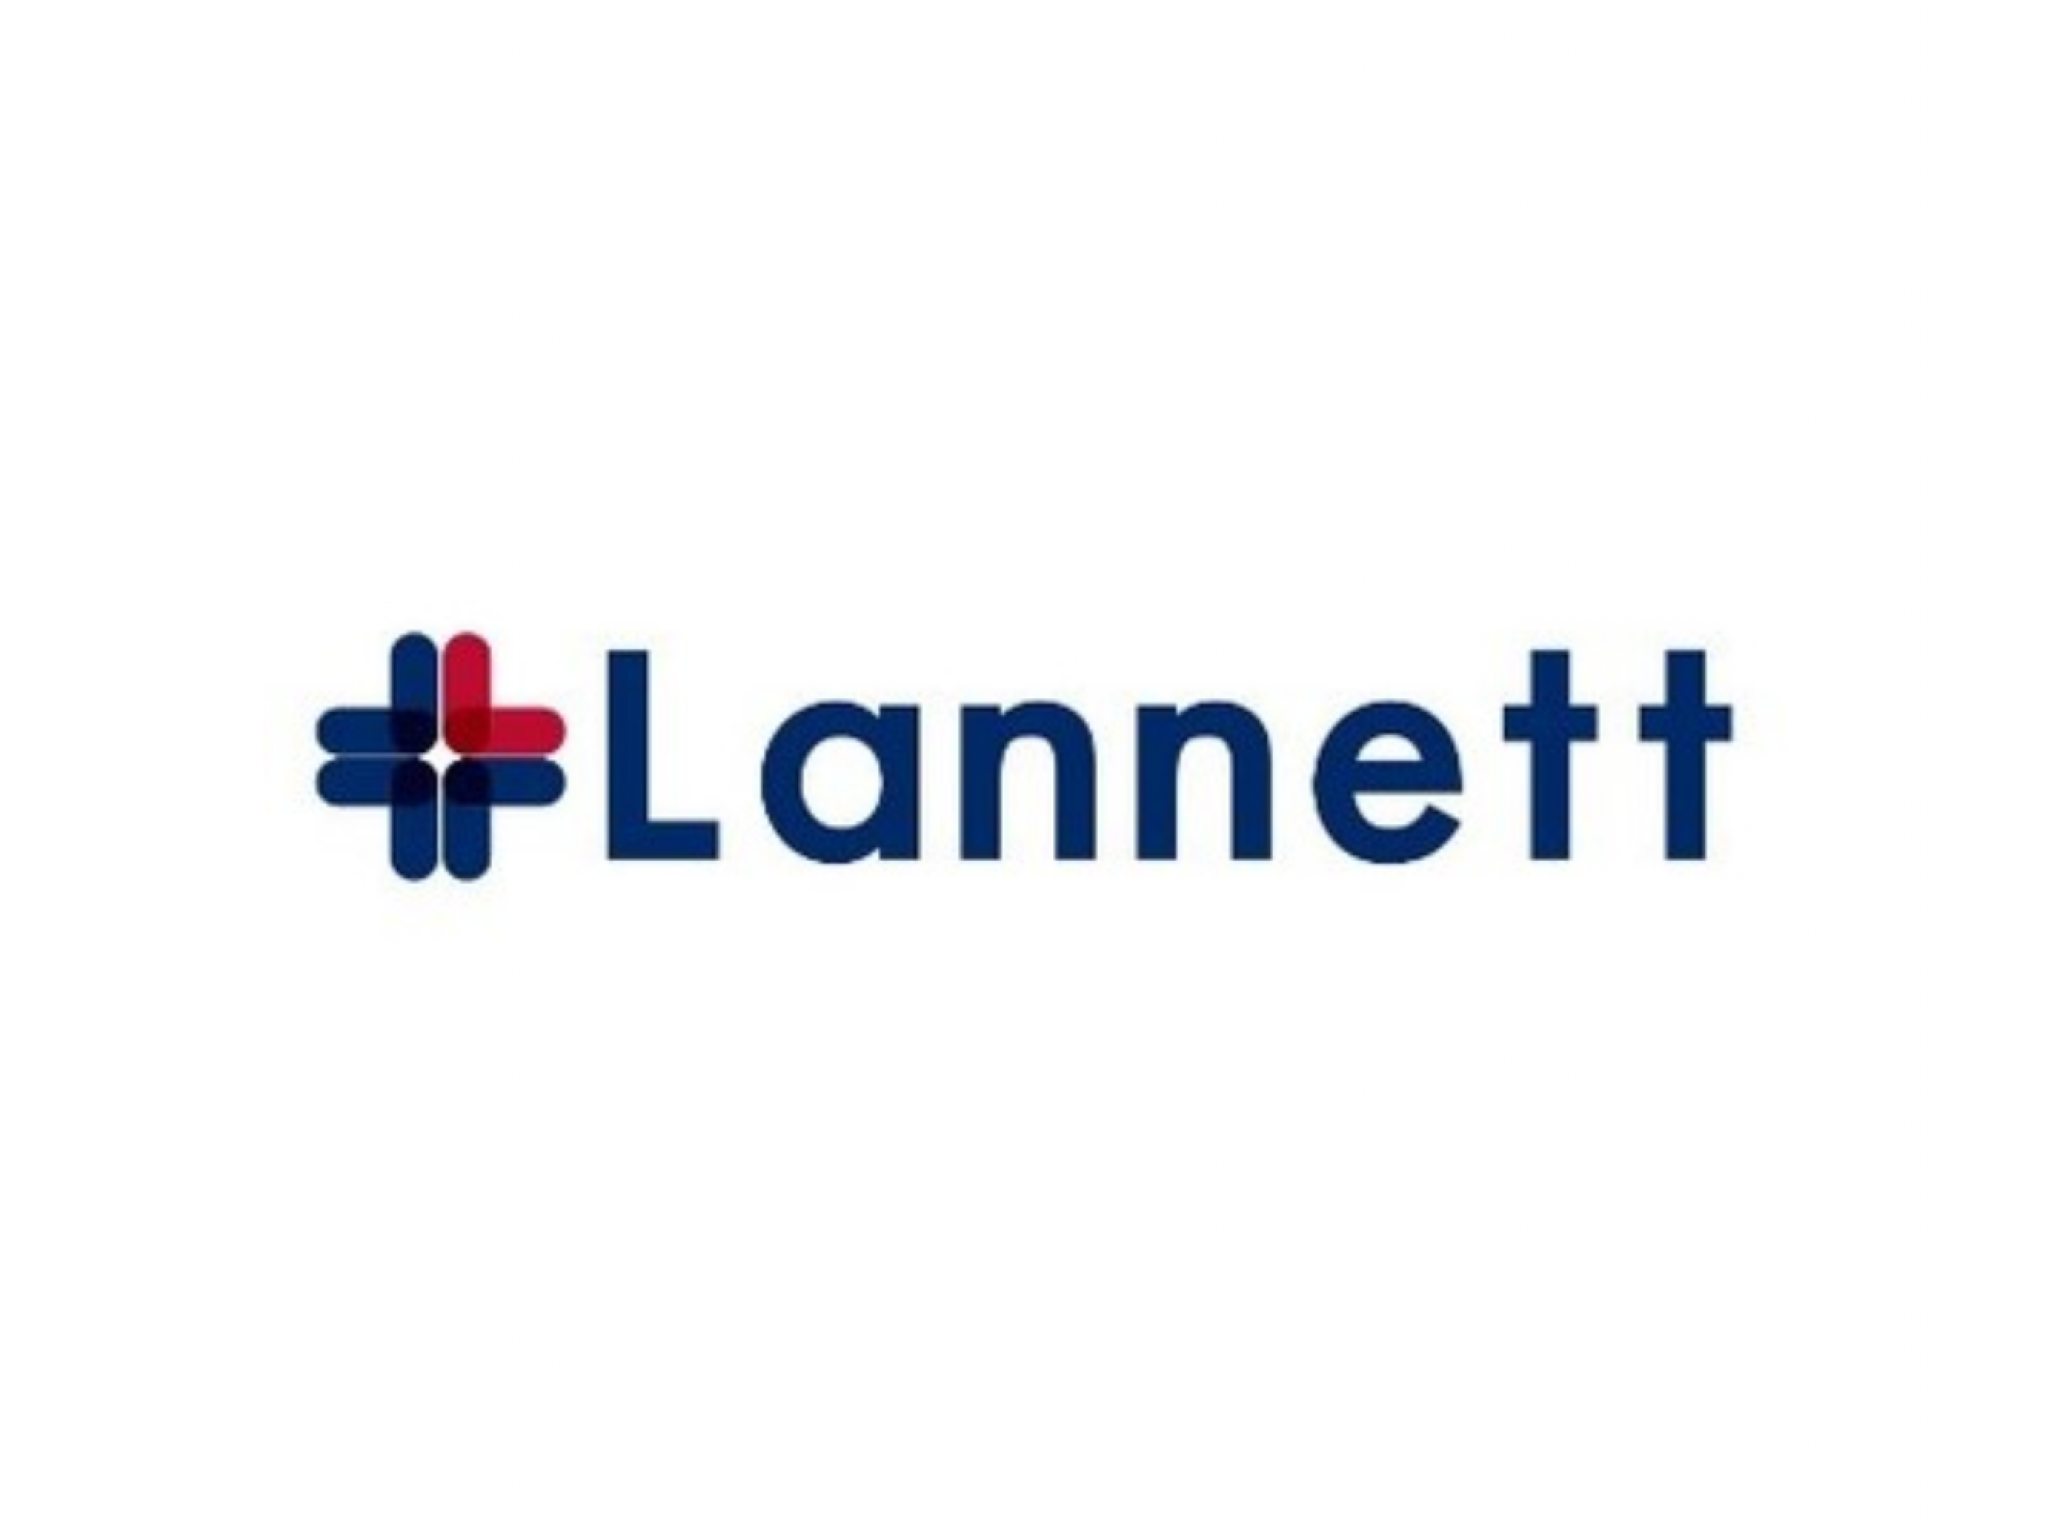  lannett-casts-regulatory-doubts-for-its-insulin-glargine-product 